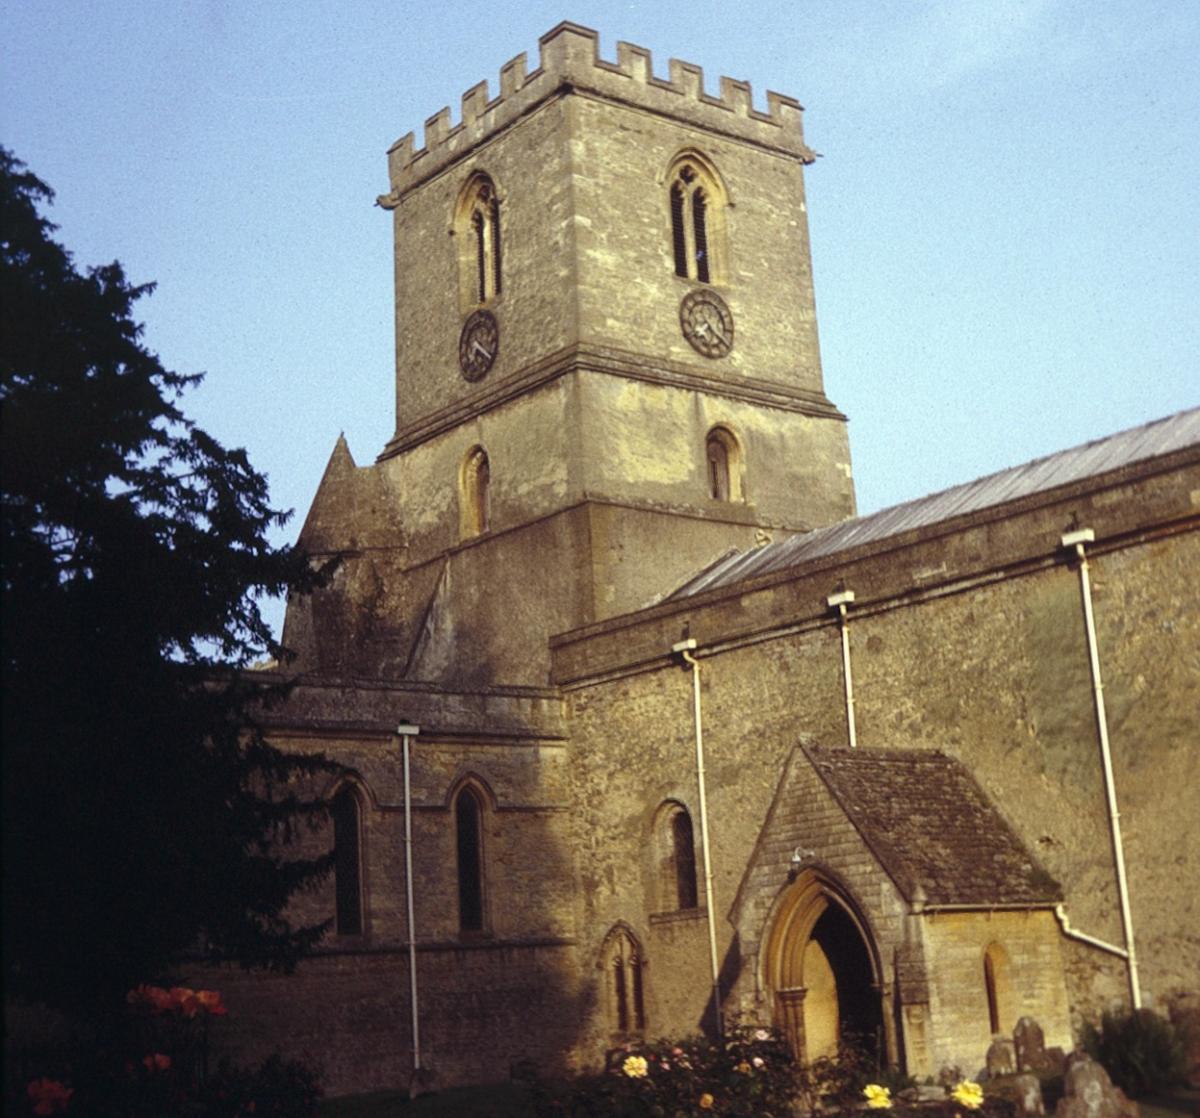 St Michael's church, Stanton Harcourt